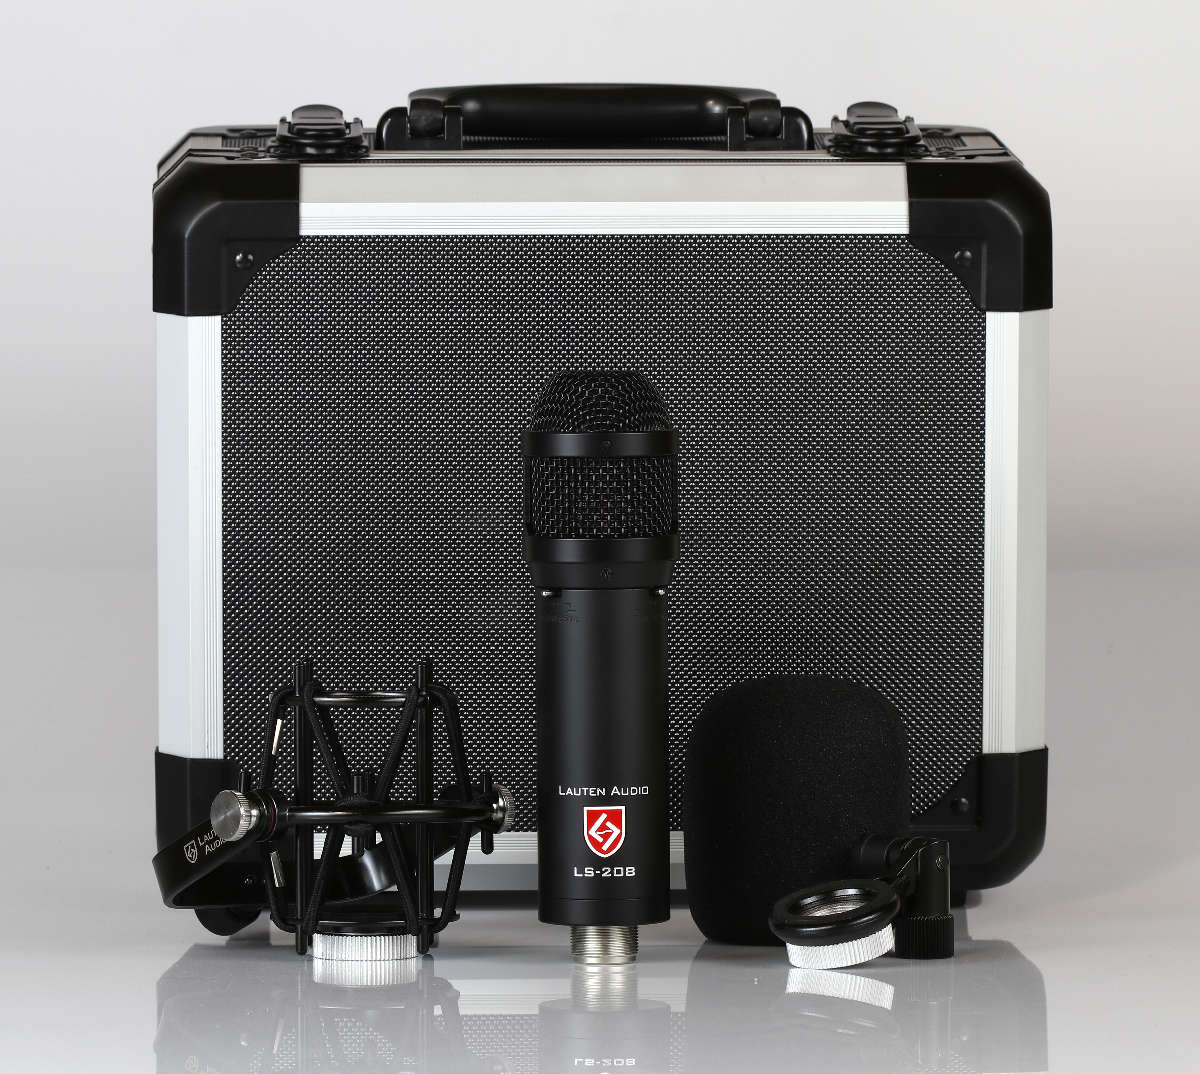 Lauten Audio LS-208 microphone and accessories